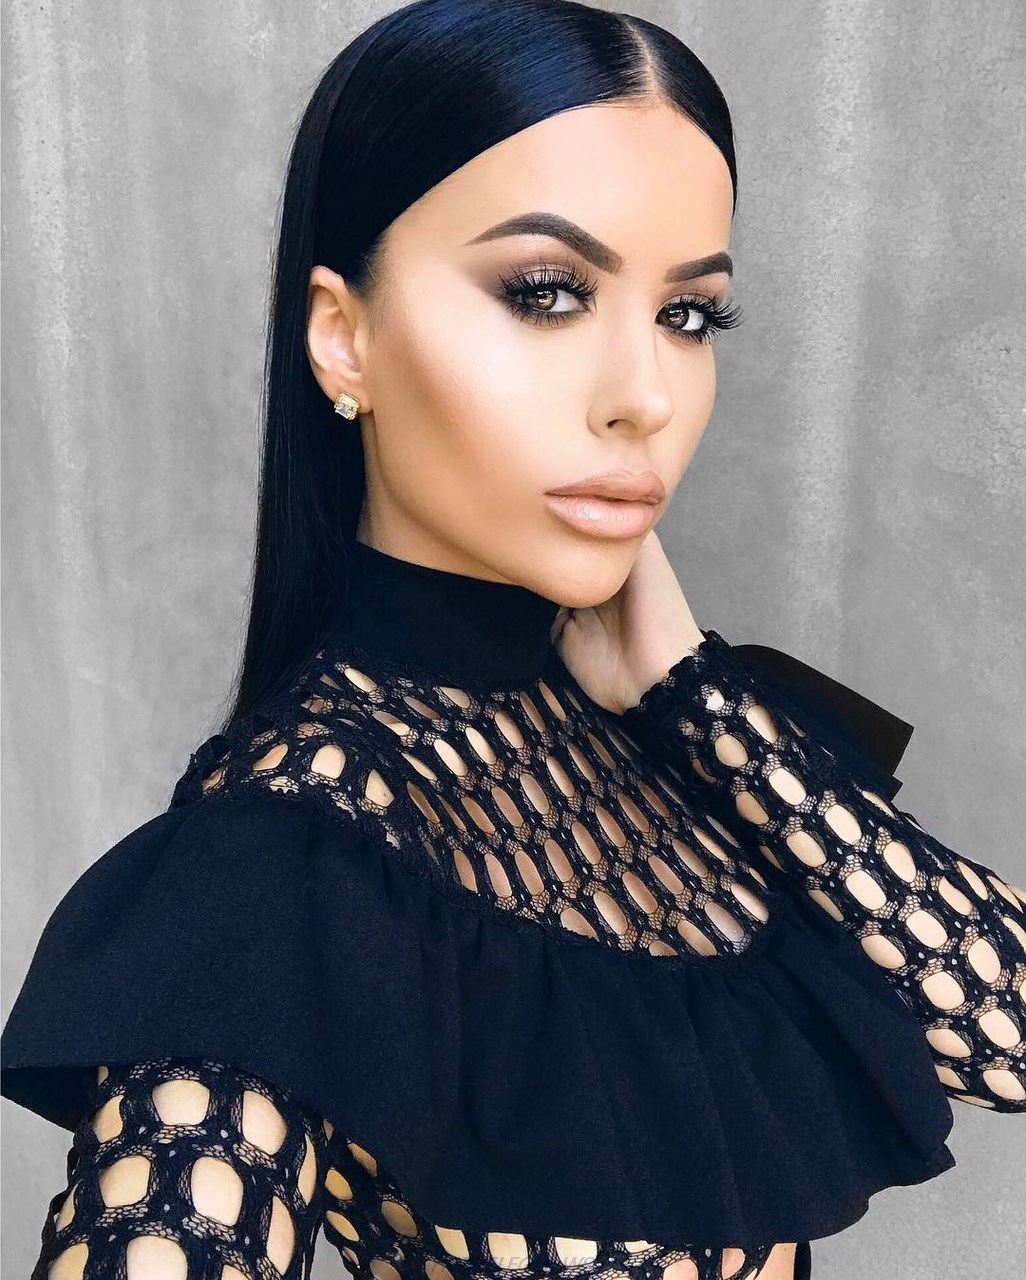 Herve Leger Kim Kardashian Black Long Sleeve Two Piece Stars Dress